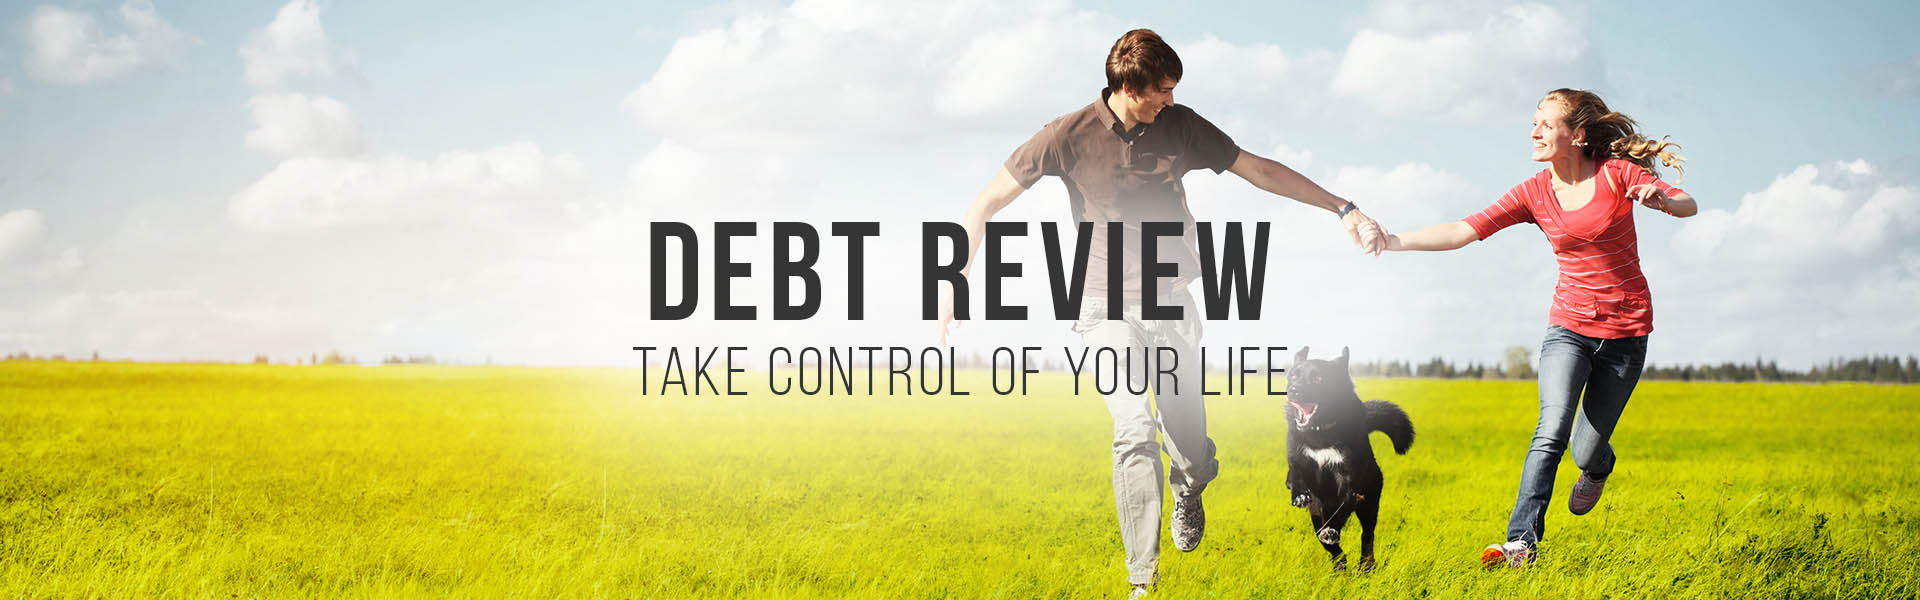 debt-review-banner